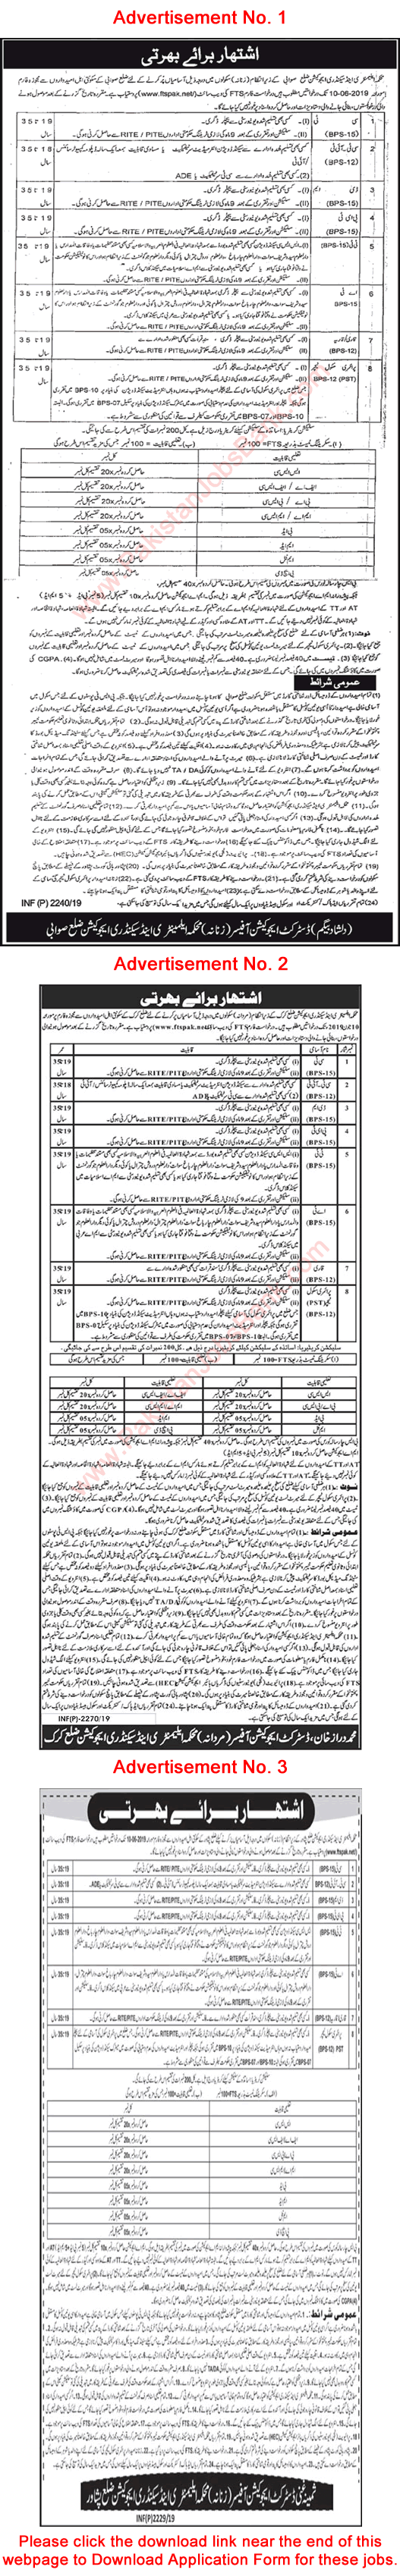 Elementary and Secondary Education Department KPK Jobs 2019 May FTS Application Form Swabi / Karak / Peshawar Latest